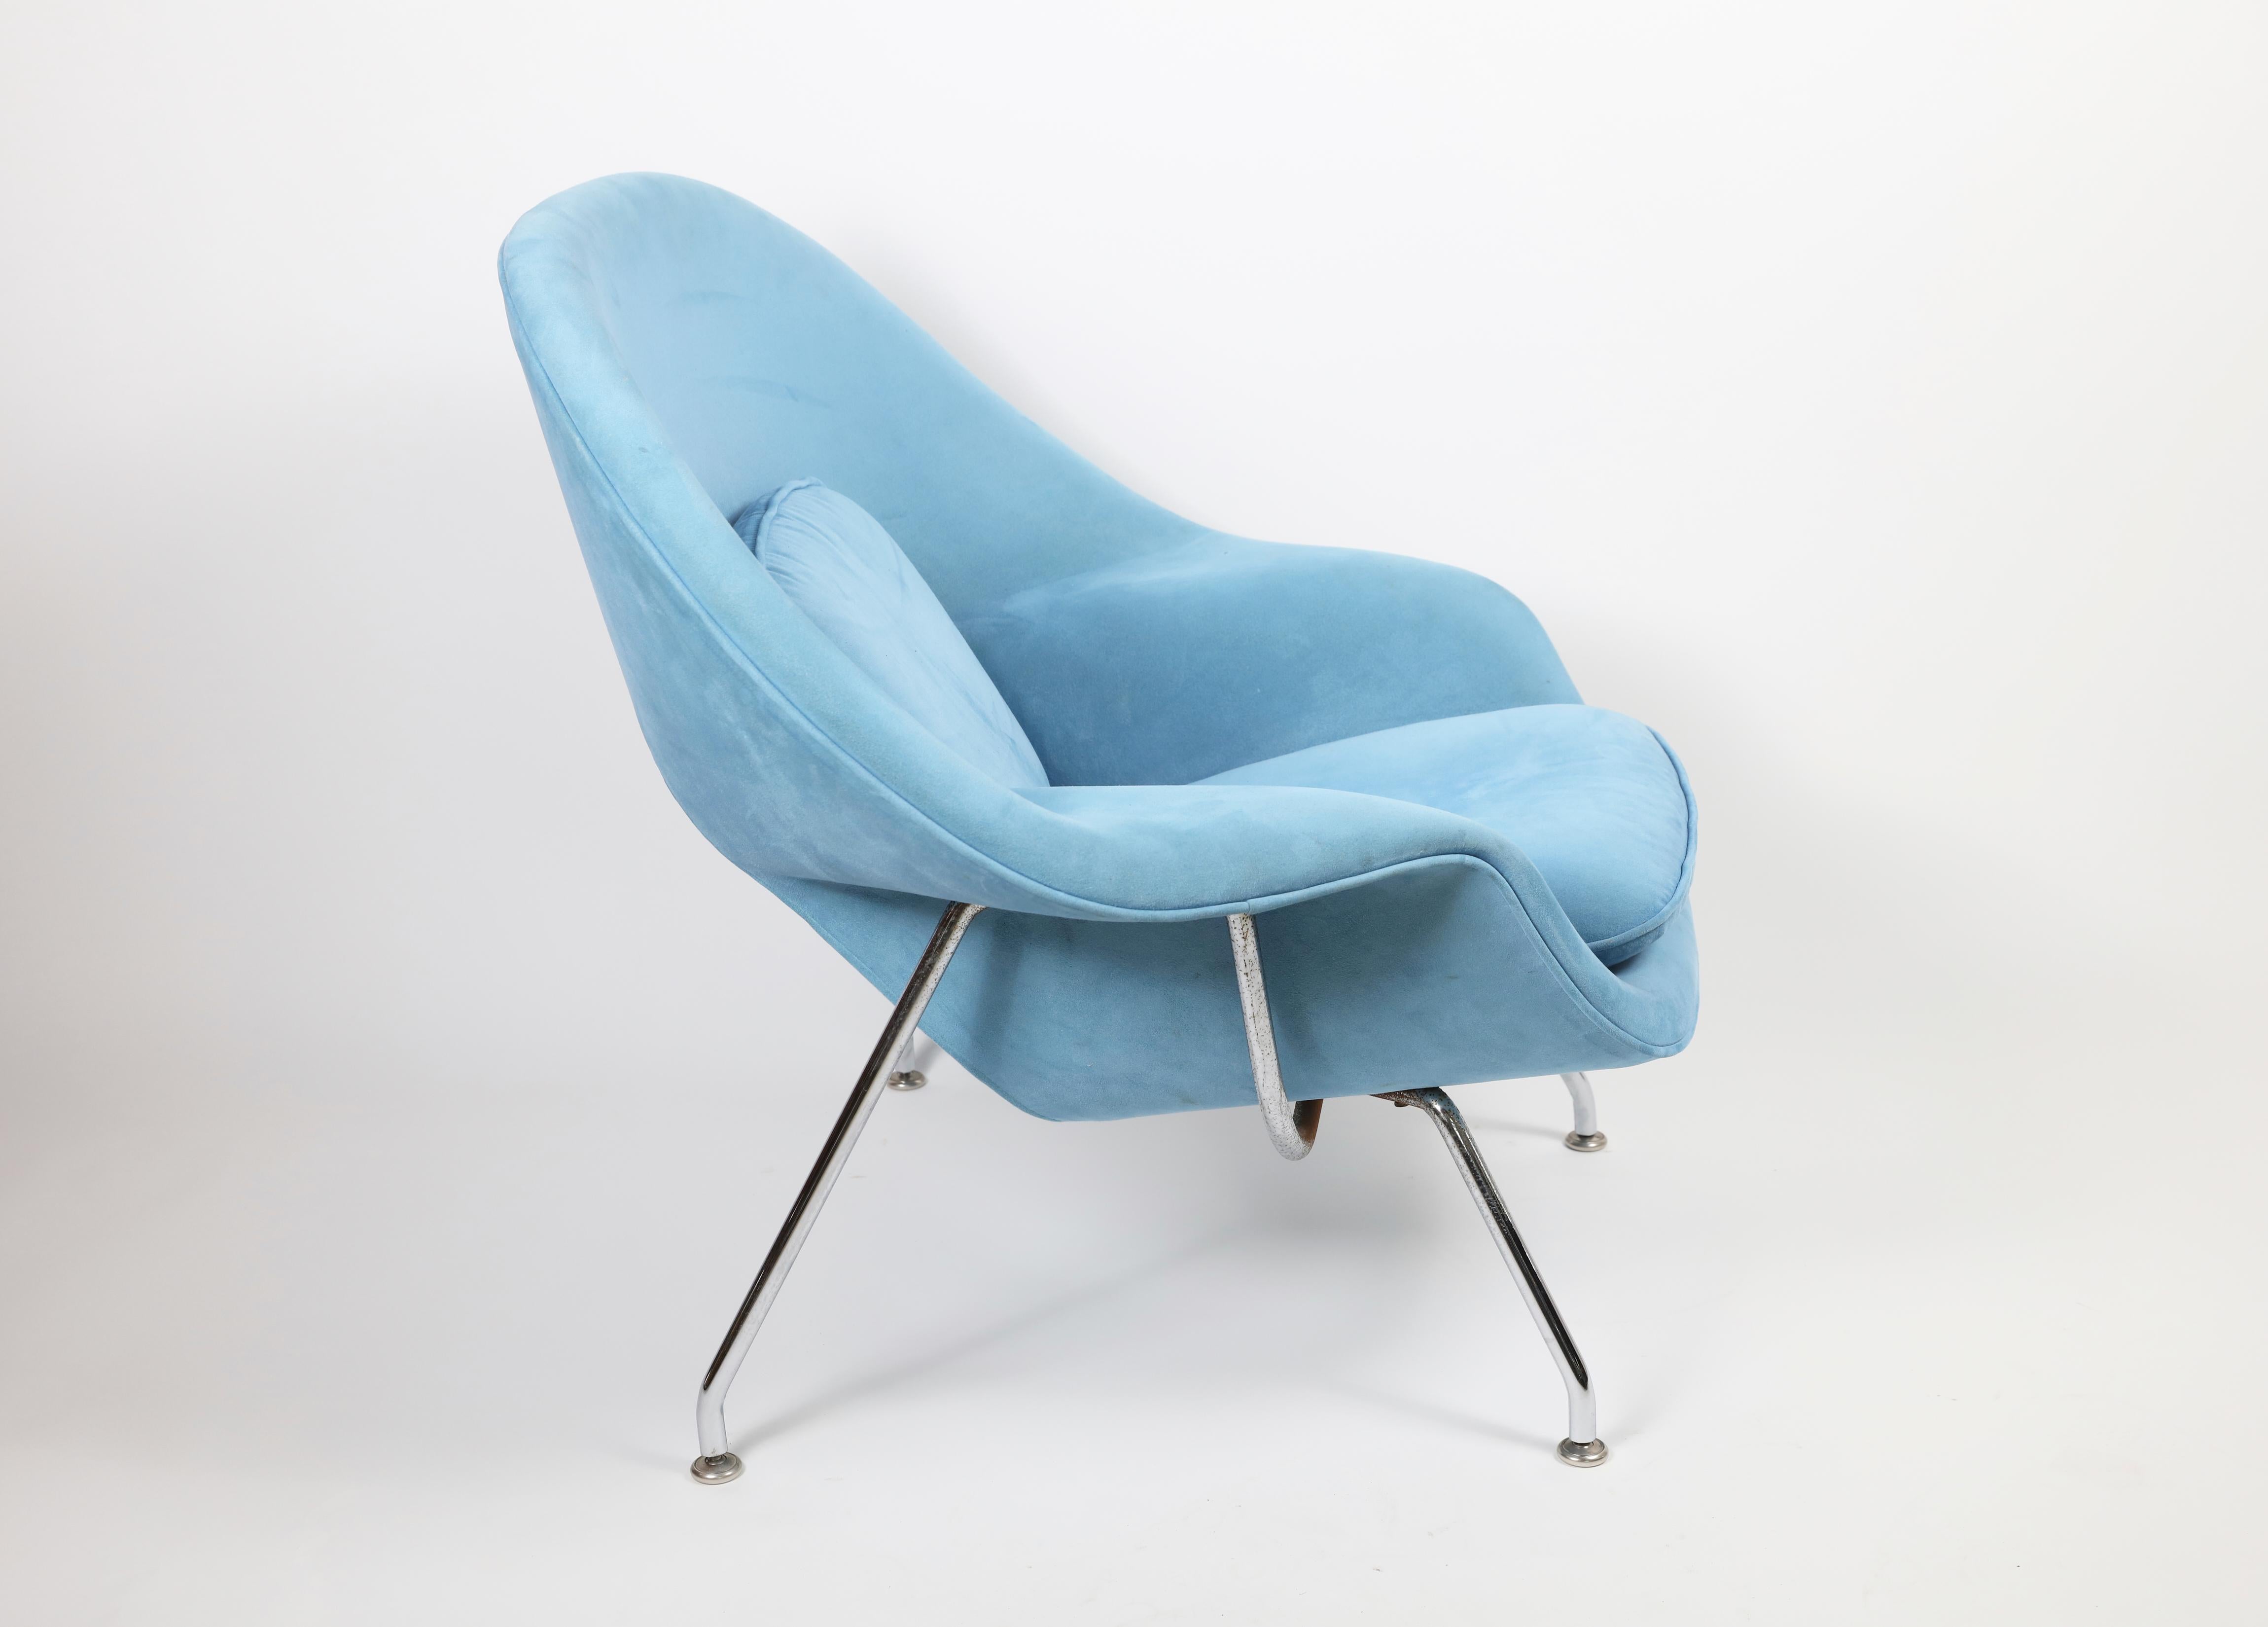 Knoll mini womb chair by Eero Saarinen

Measures: 27